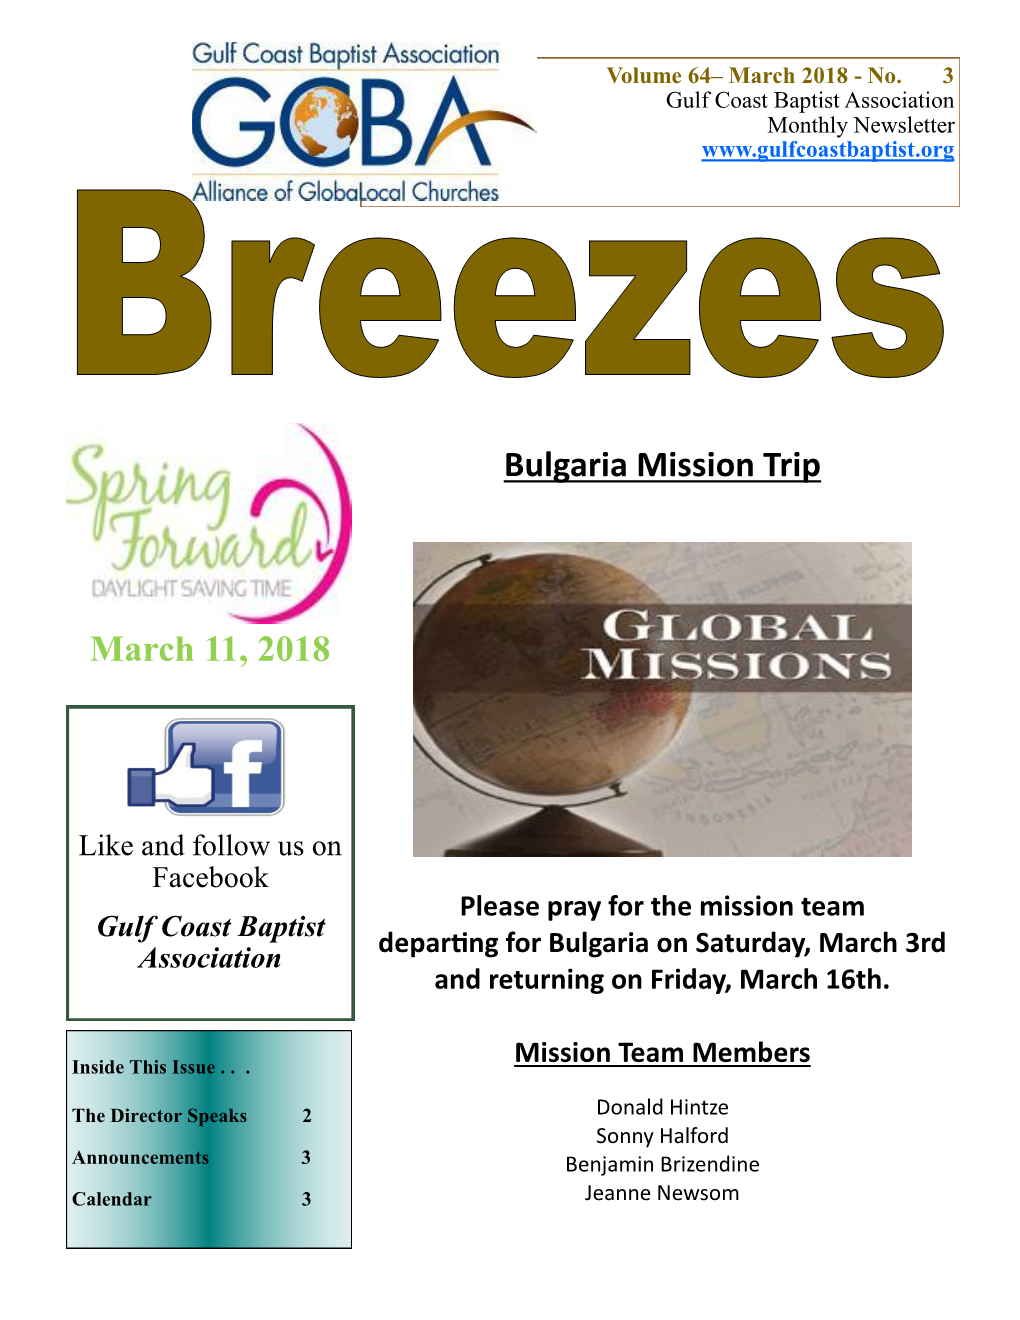 Bulgaria Mission Trip March 11, 2018